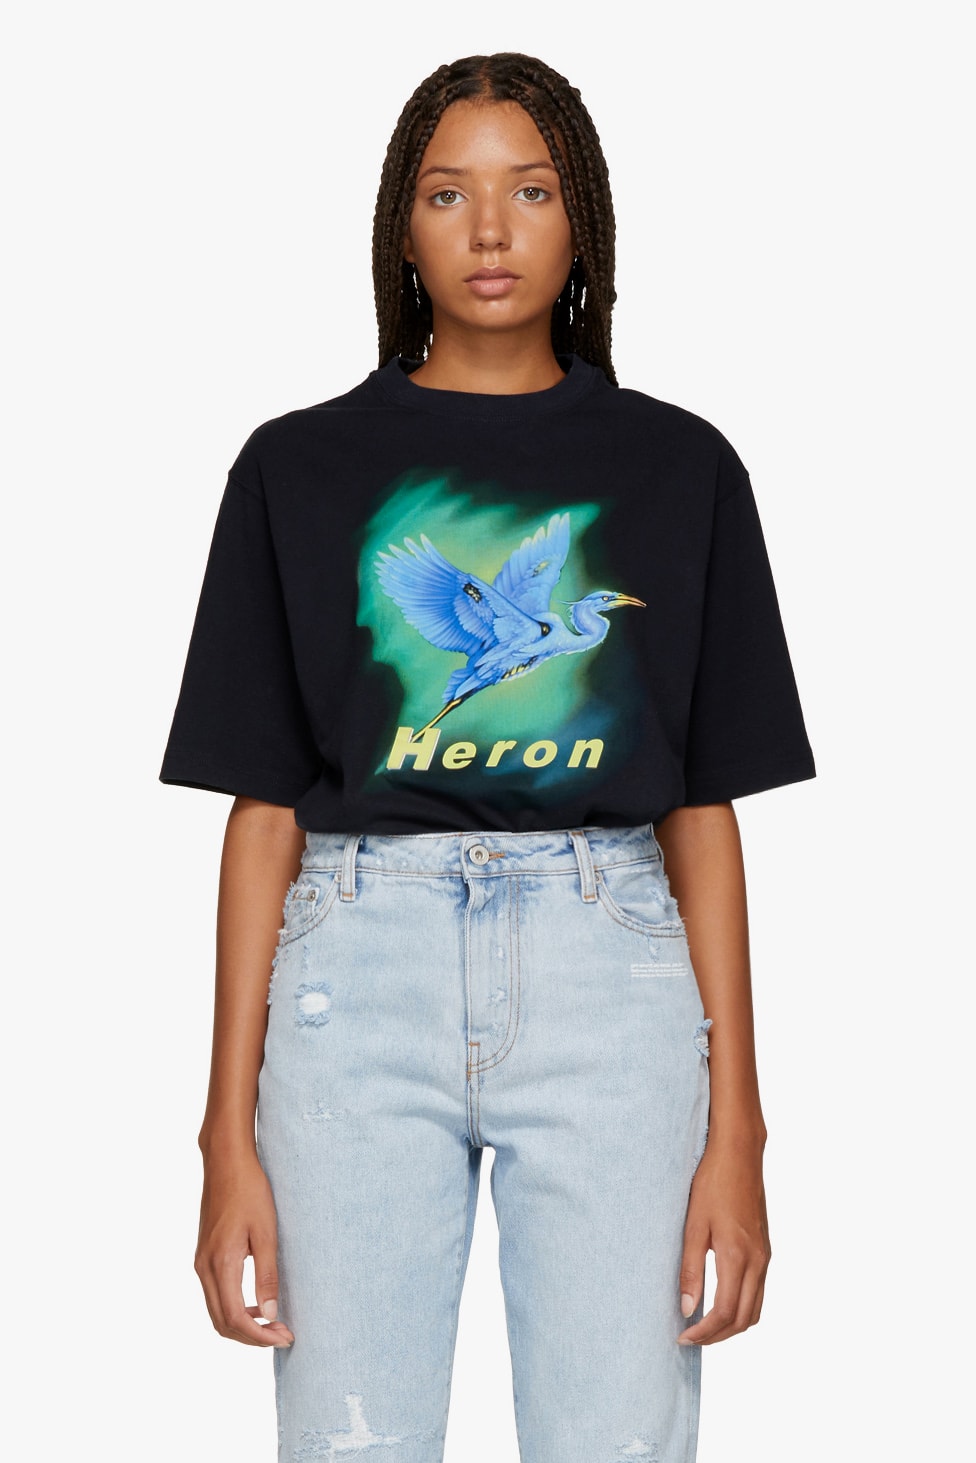 Heron Preston Fall Winter 2018 Collection Fashion SSENSE Hoodie T-Shirt Print Graphic Black Streetwear